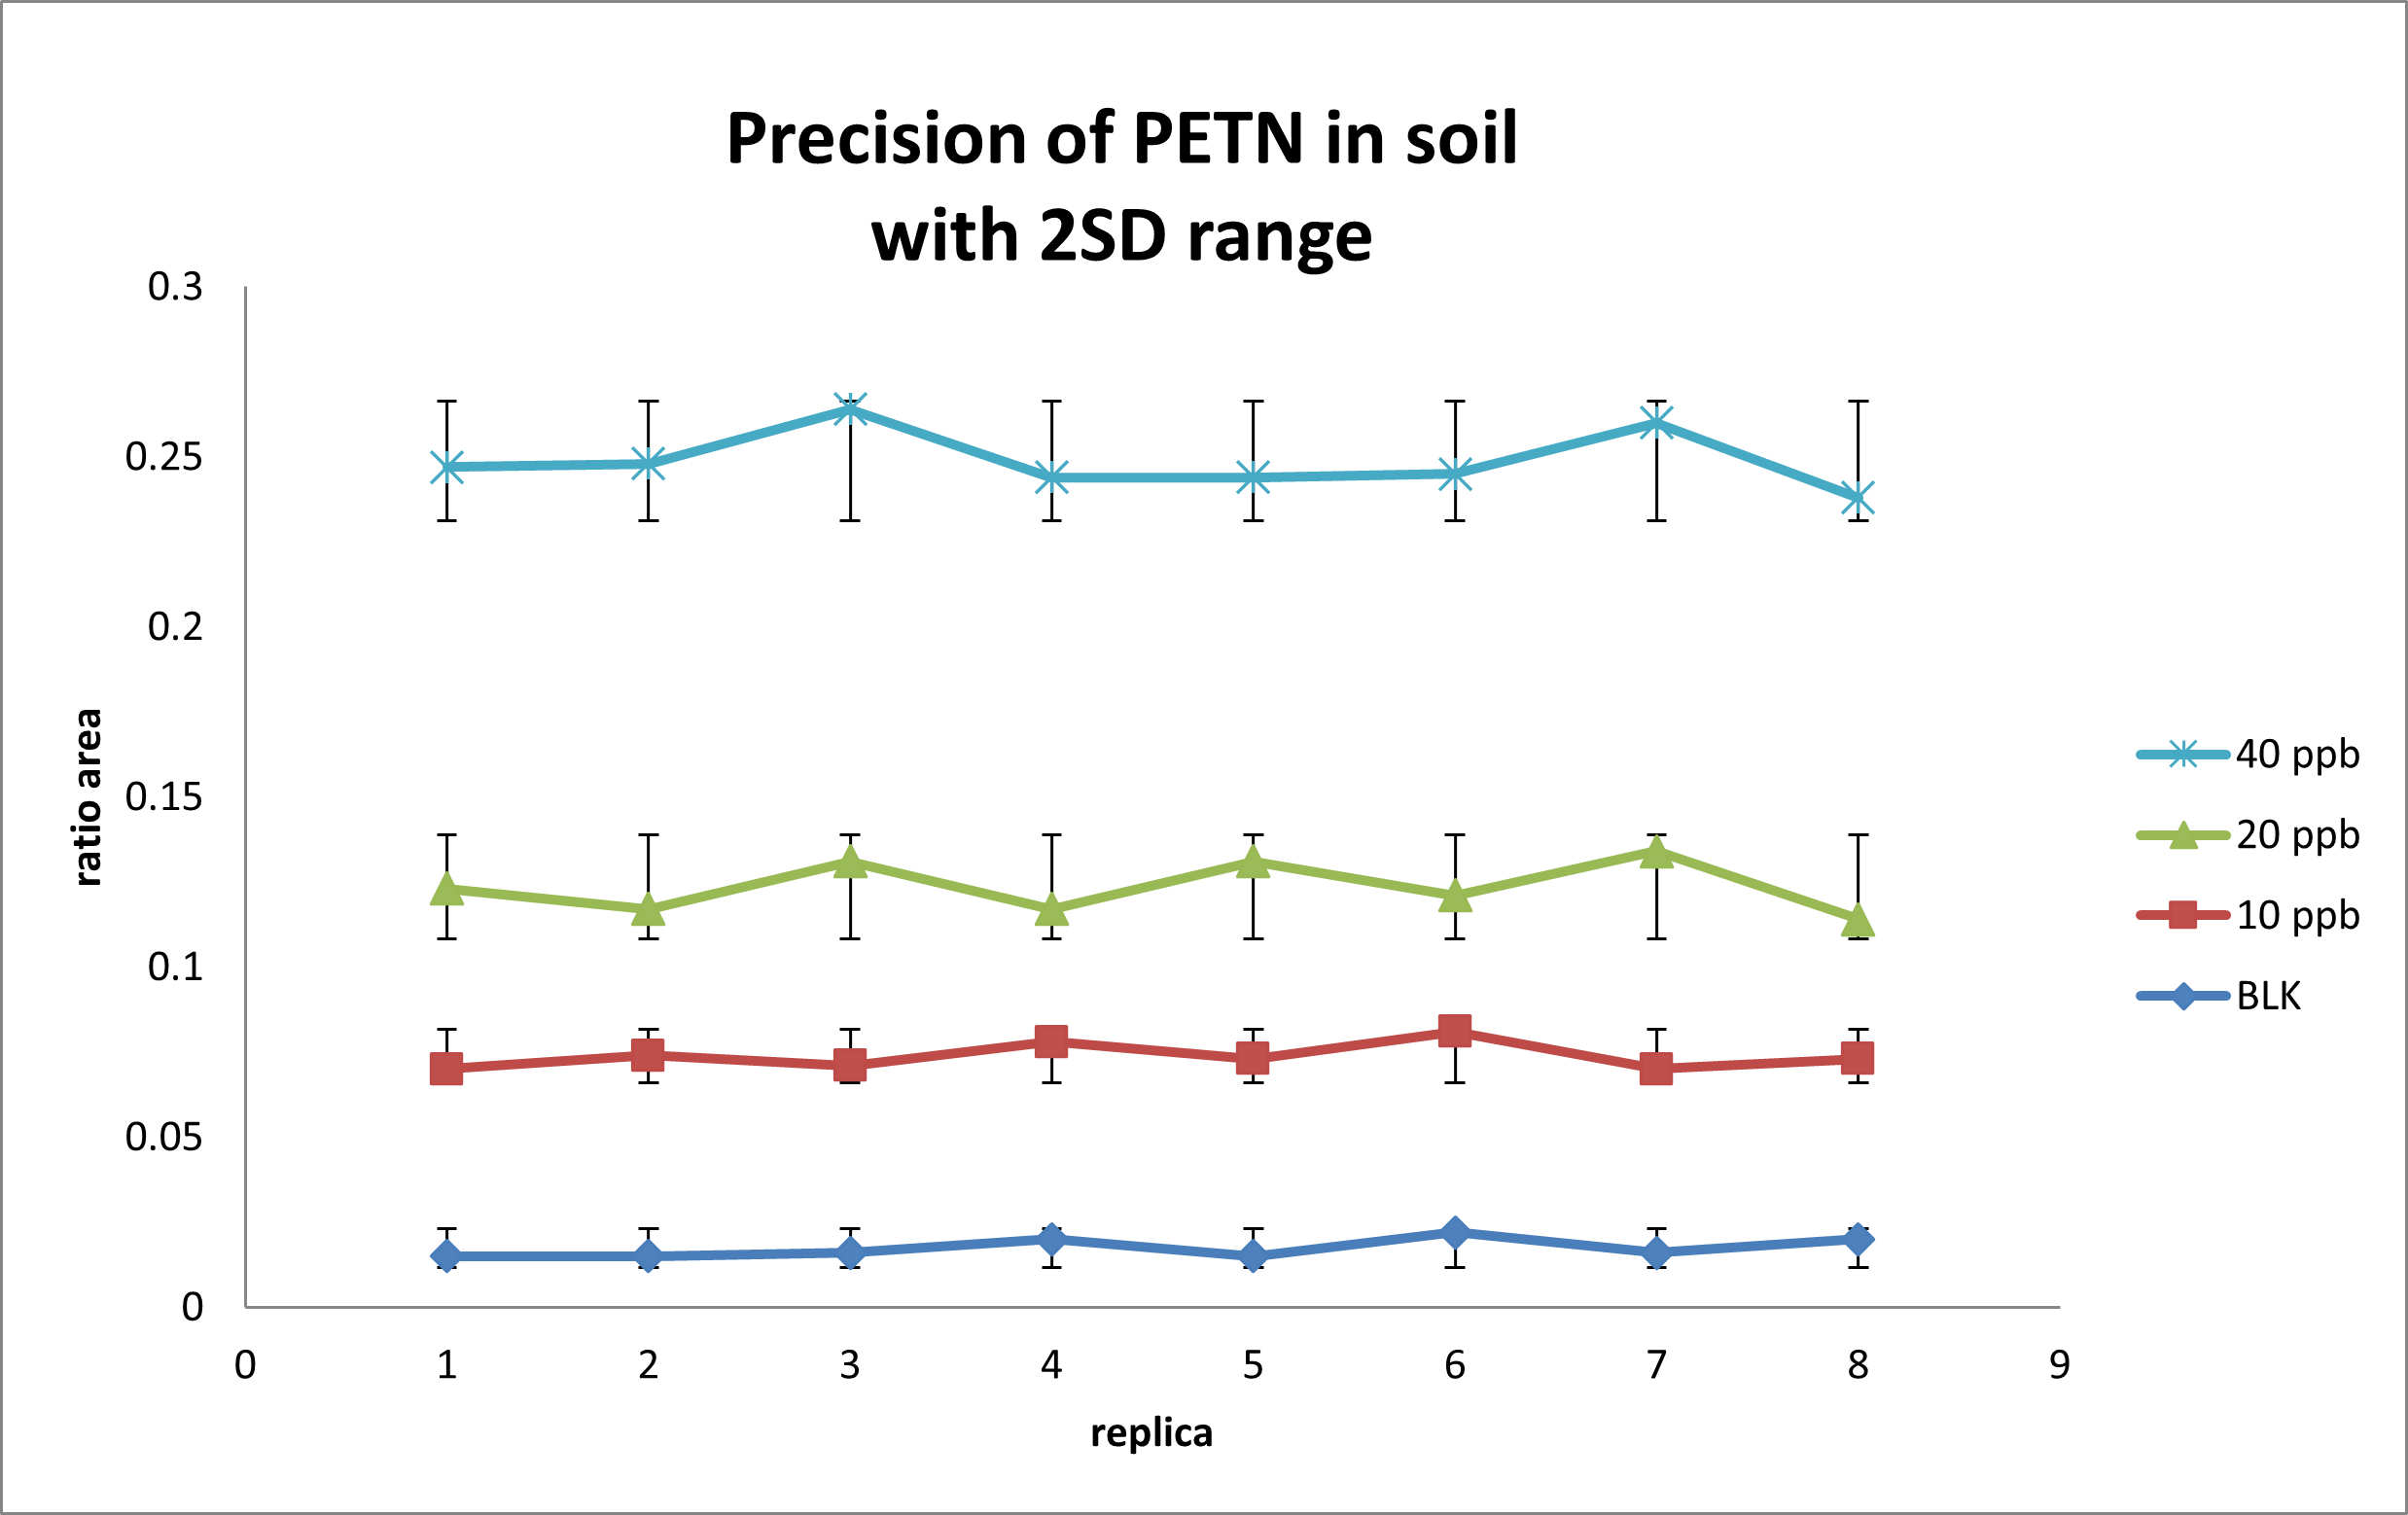 Intra-Run Precision curves for PETN